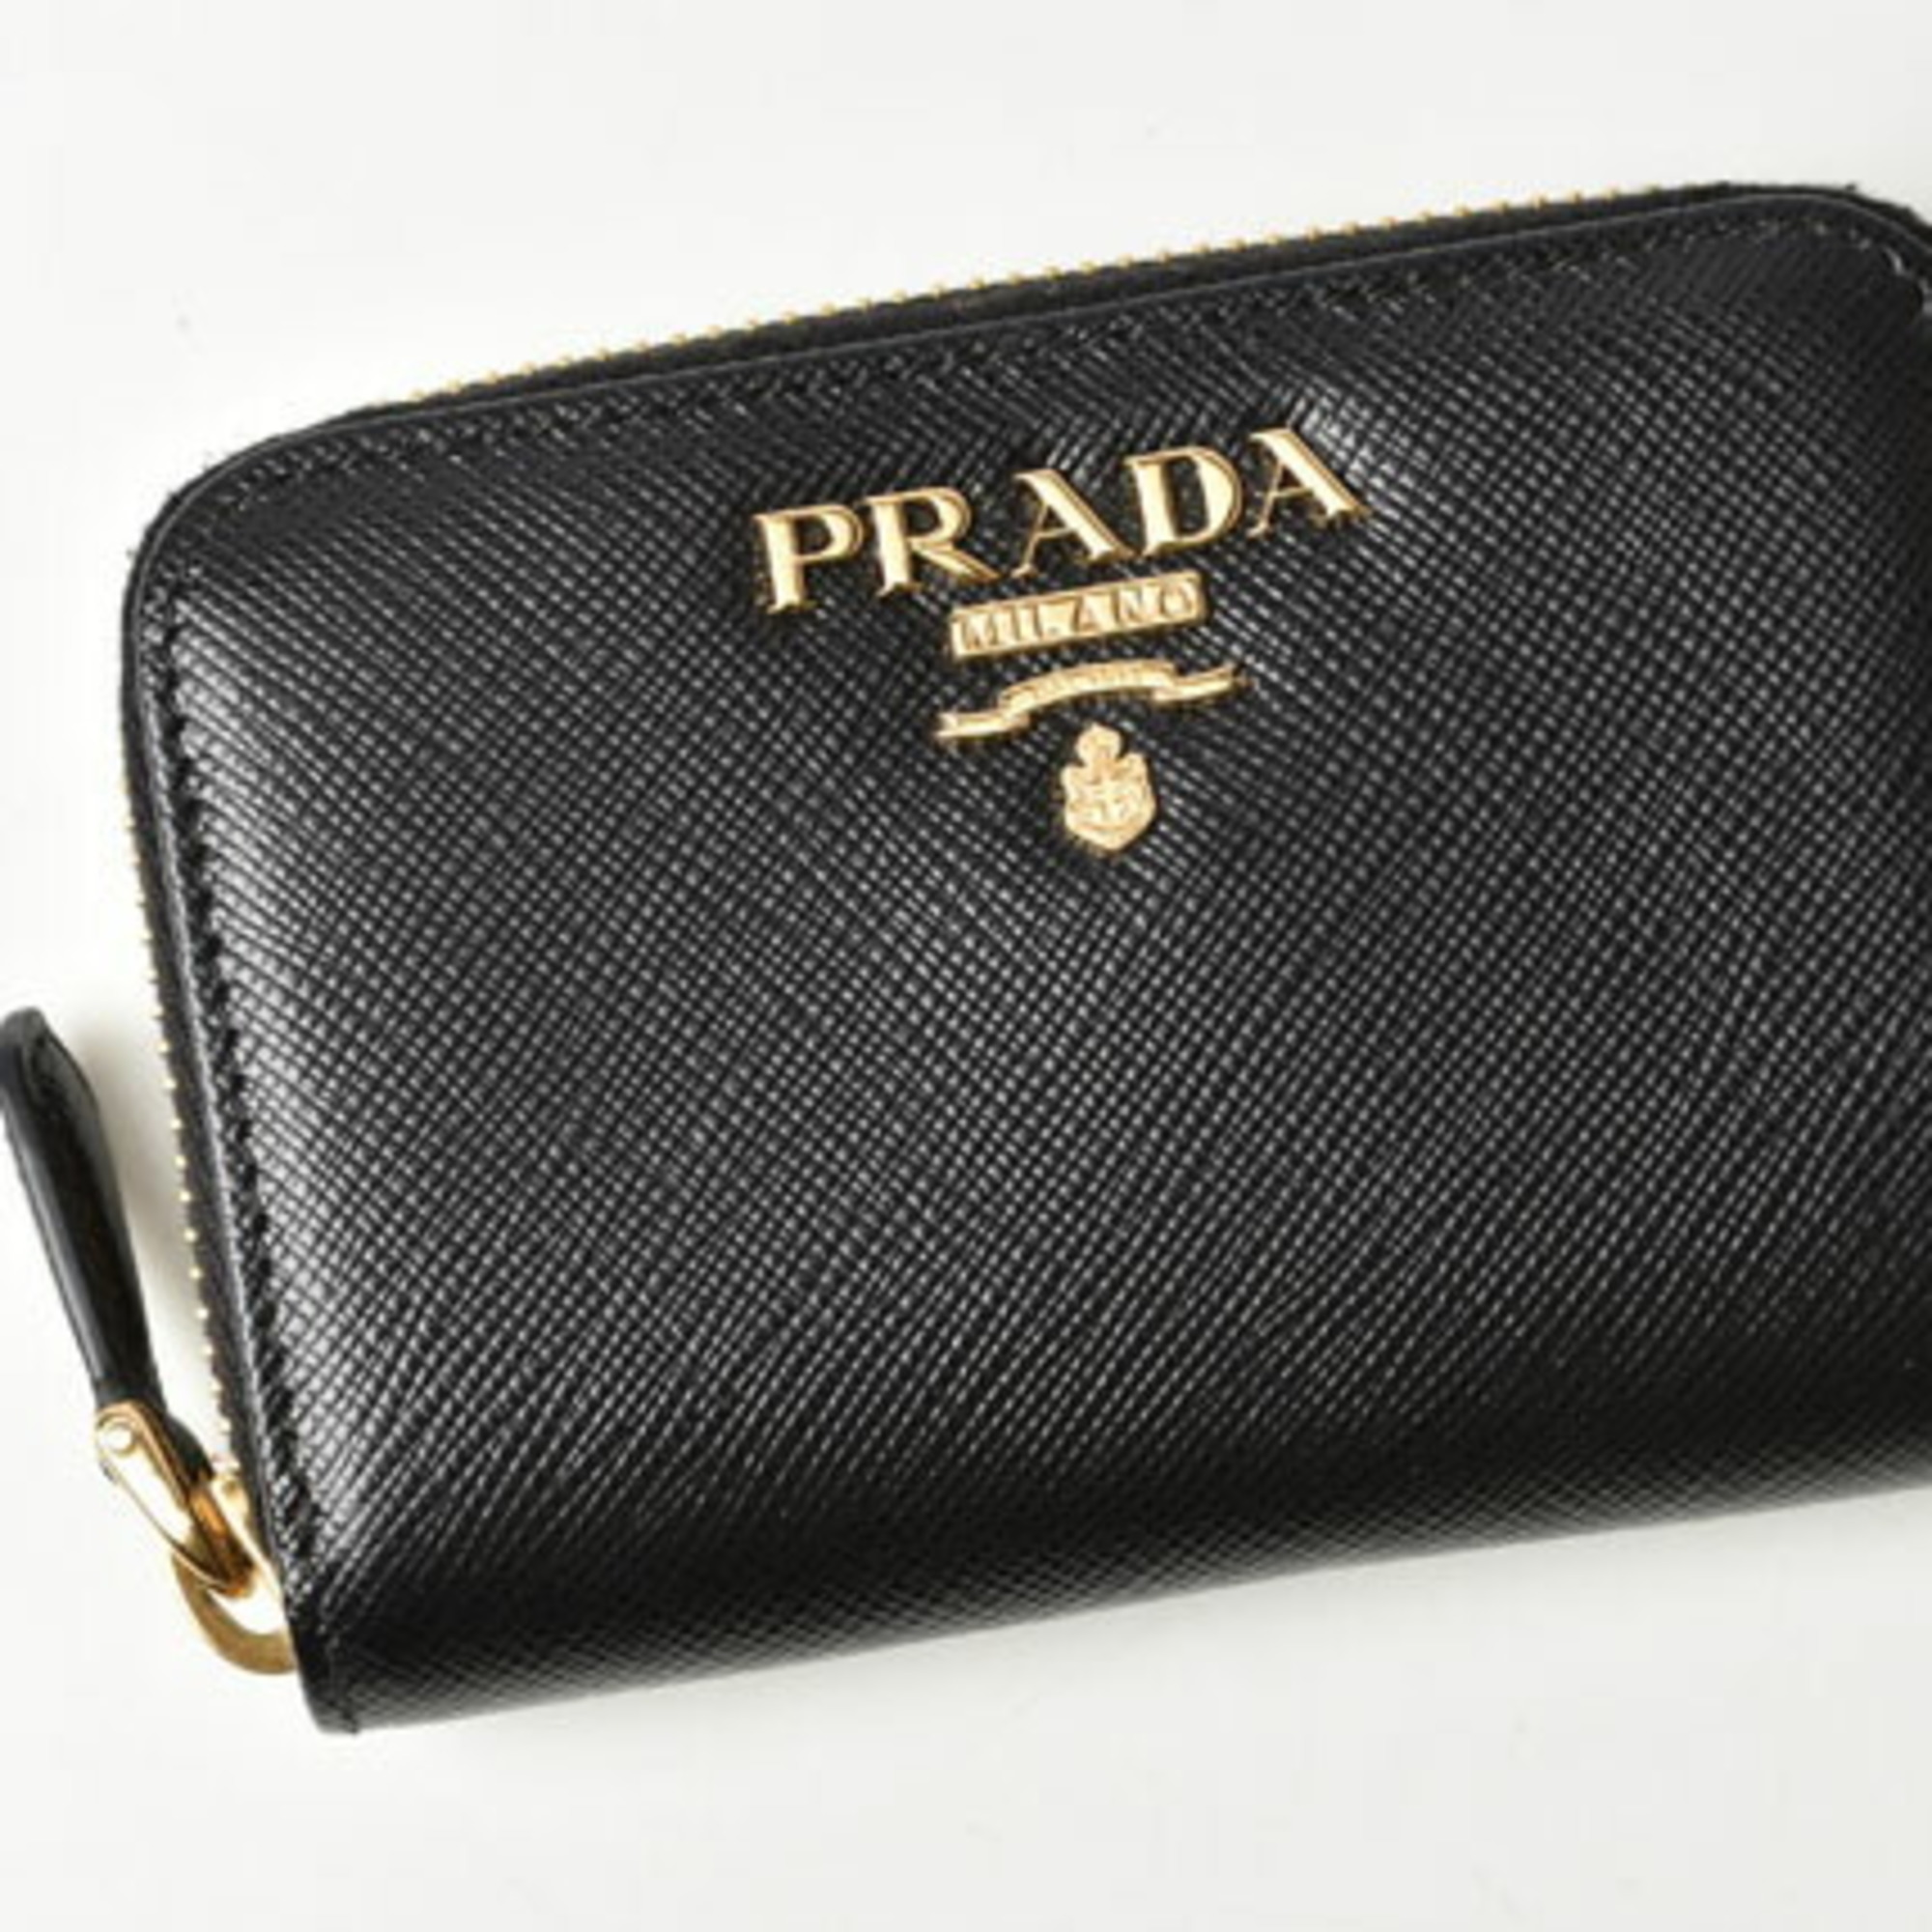 Prada wallet PRADA folding 1ML040 SAFFIANO NERO black